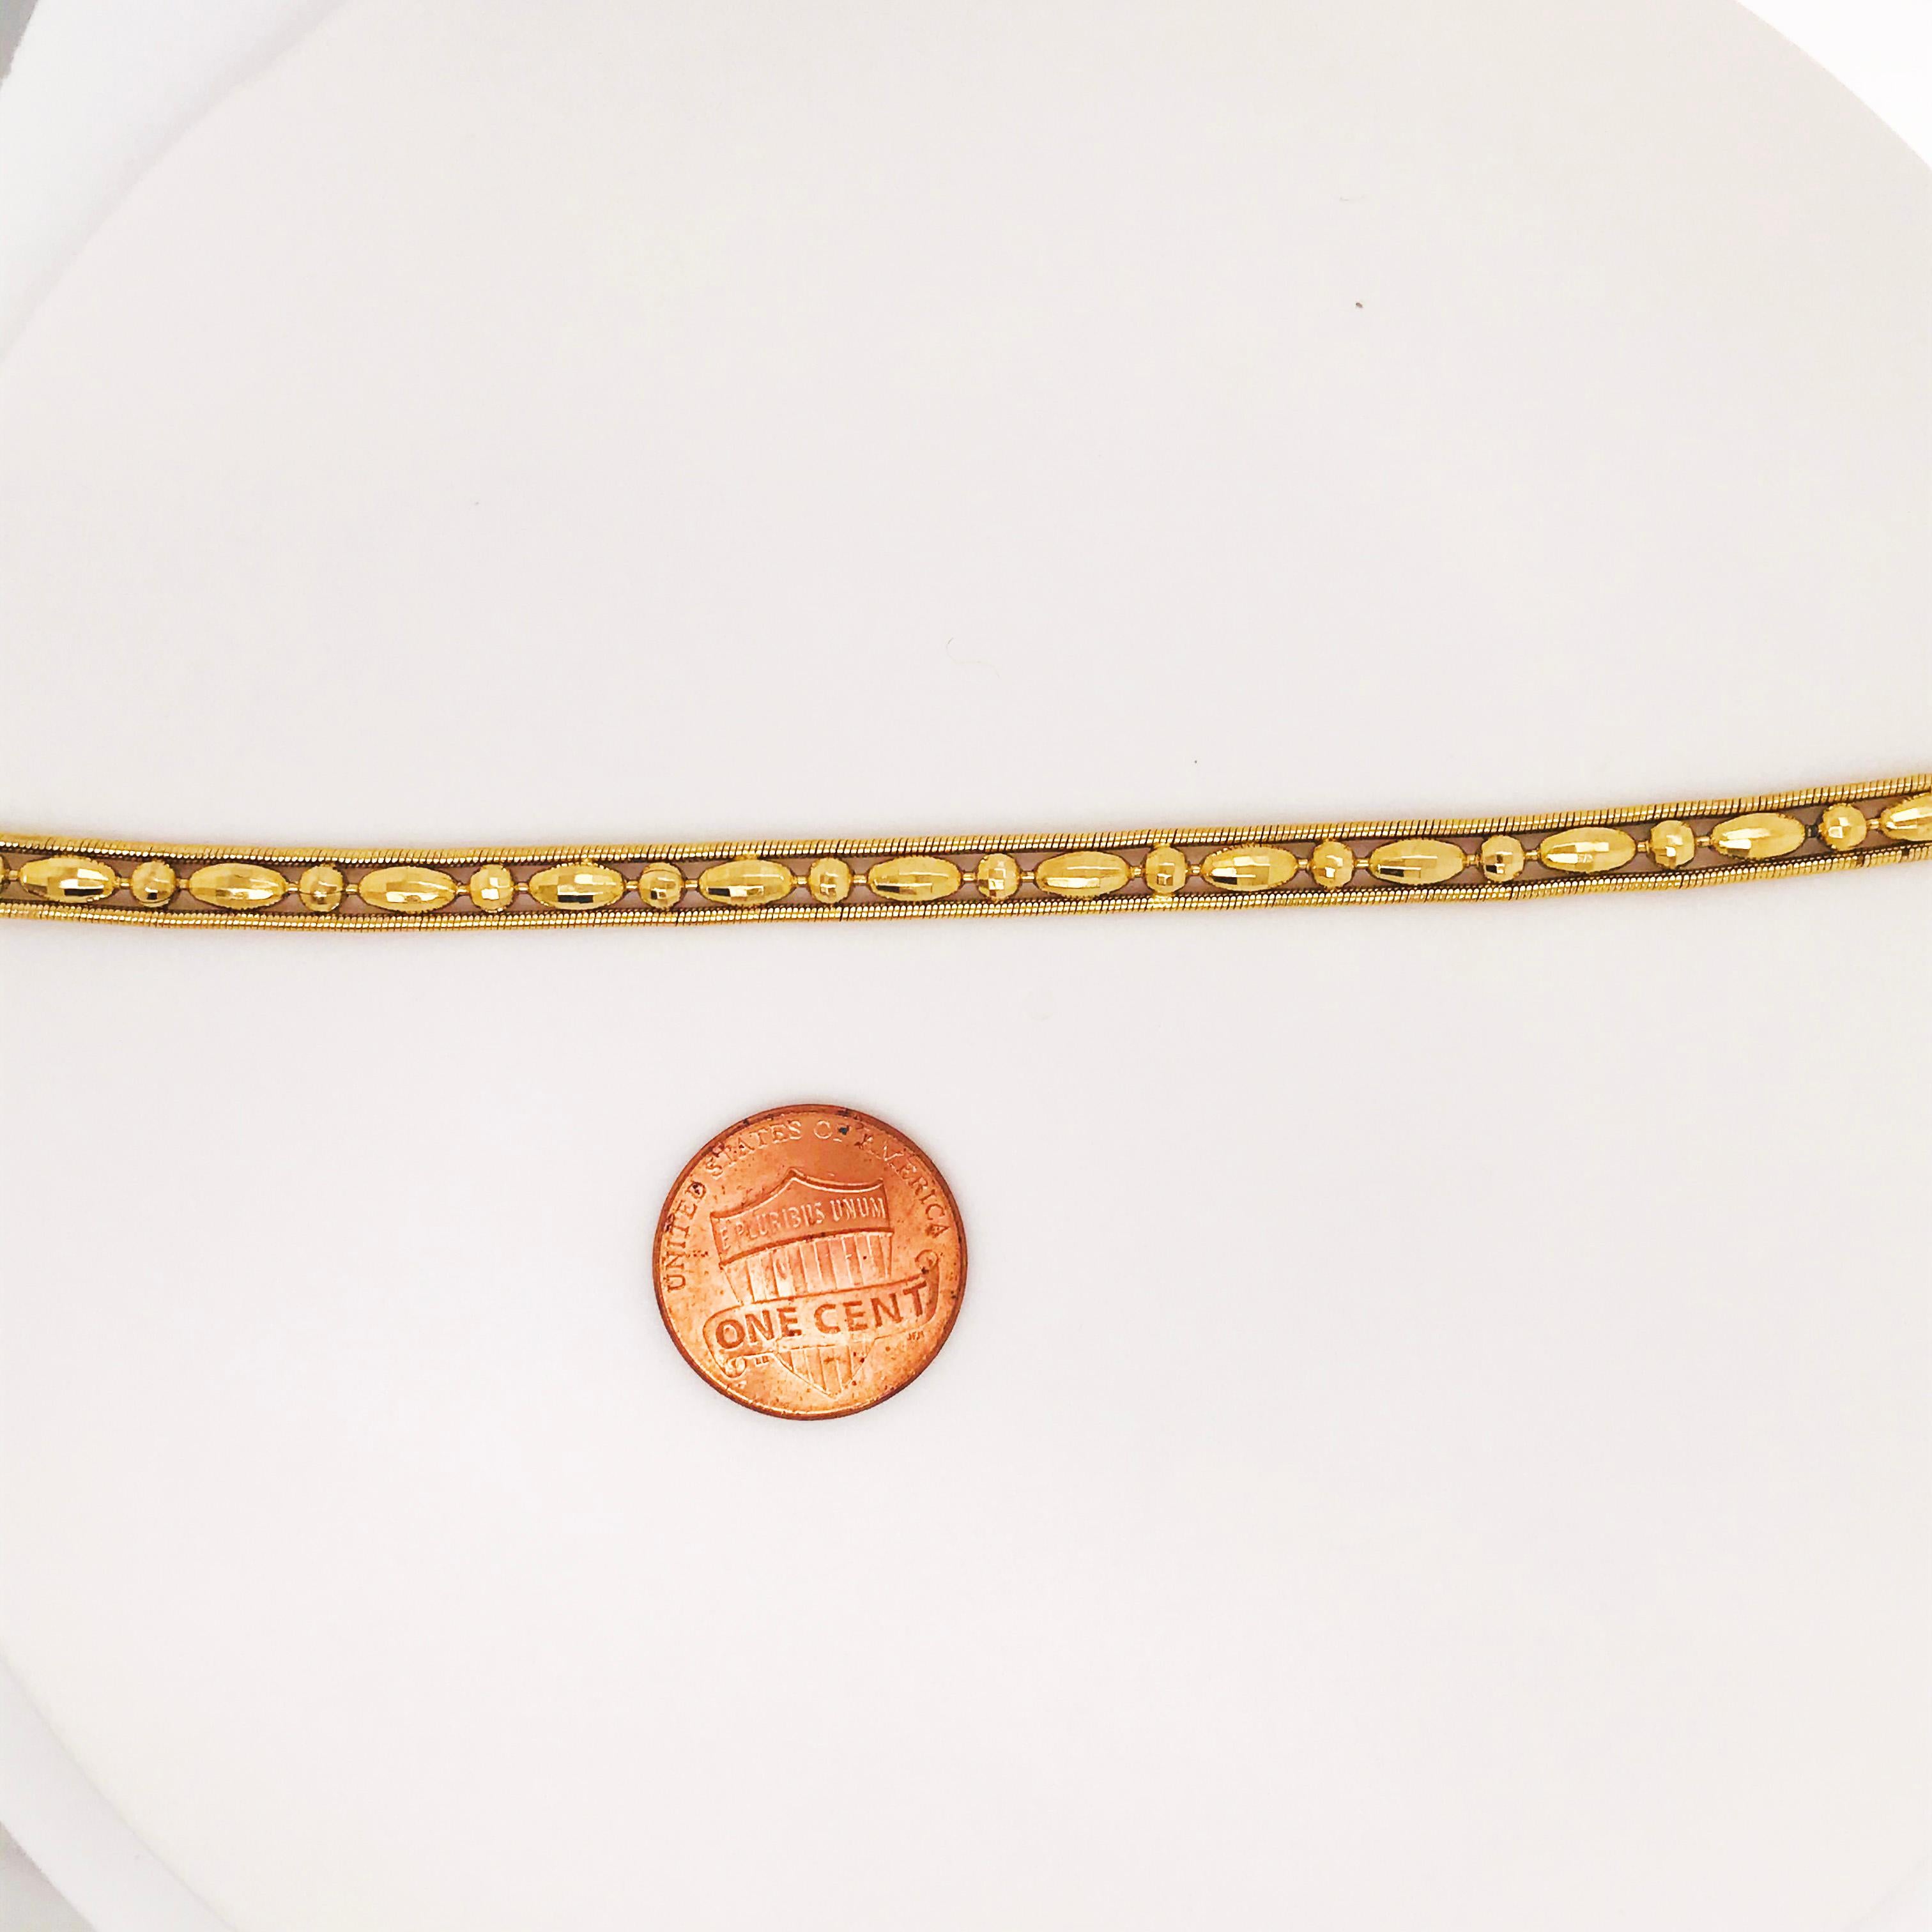 Contemporary 18 Karat Yellow Gold Diamond Cut Bracelet Heavy Weight 6.75 Inches 5 MM Wide